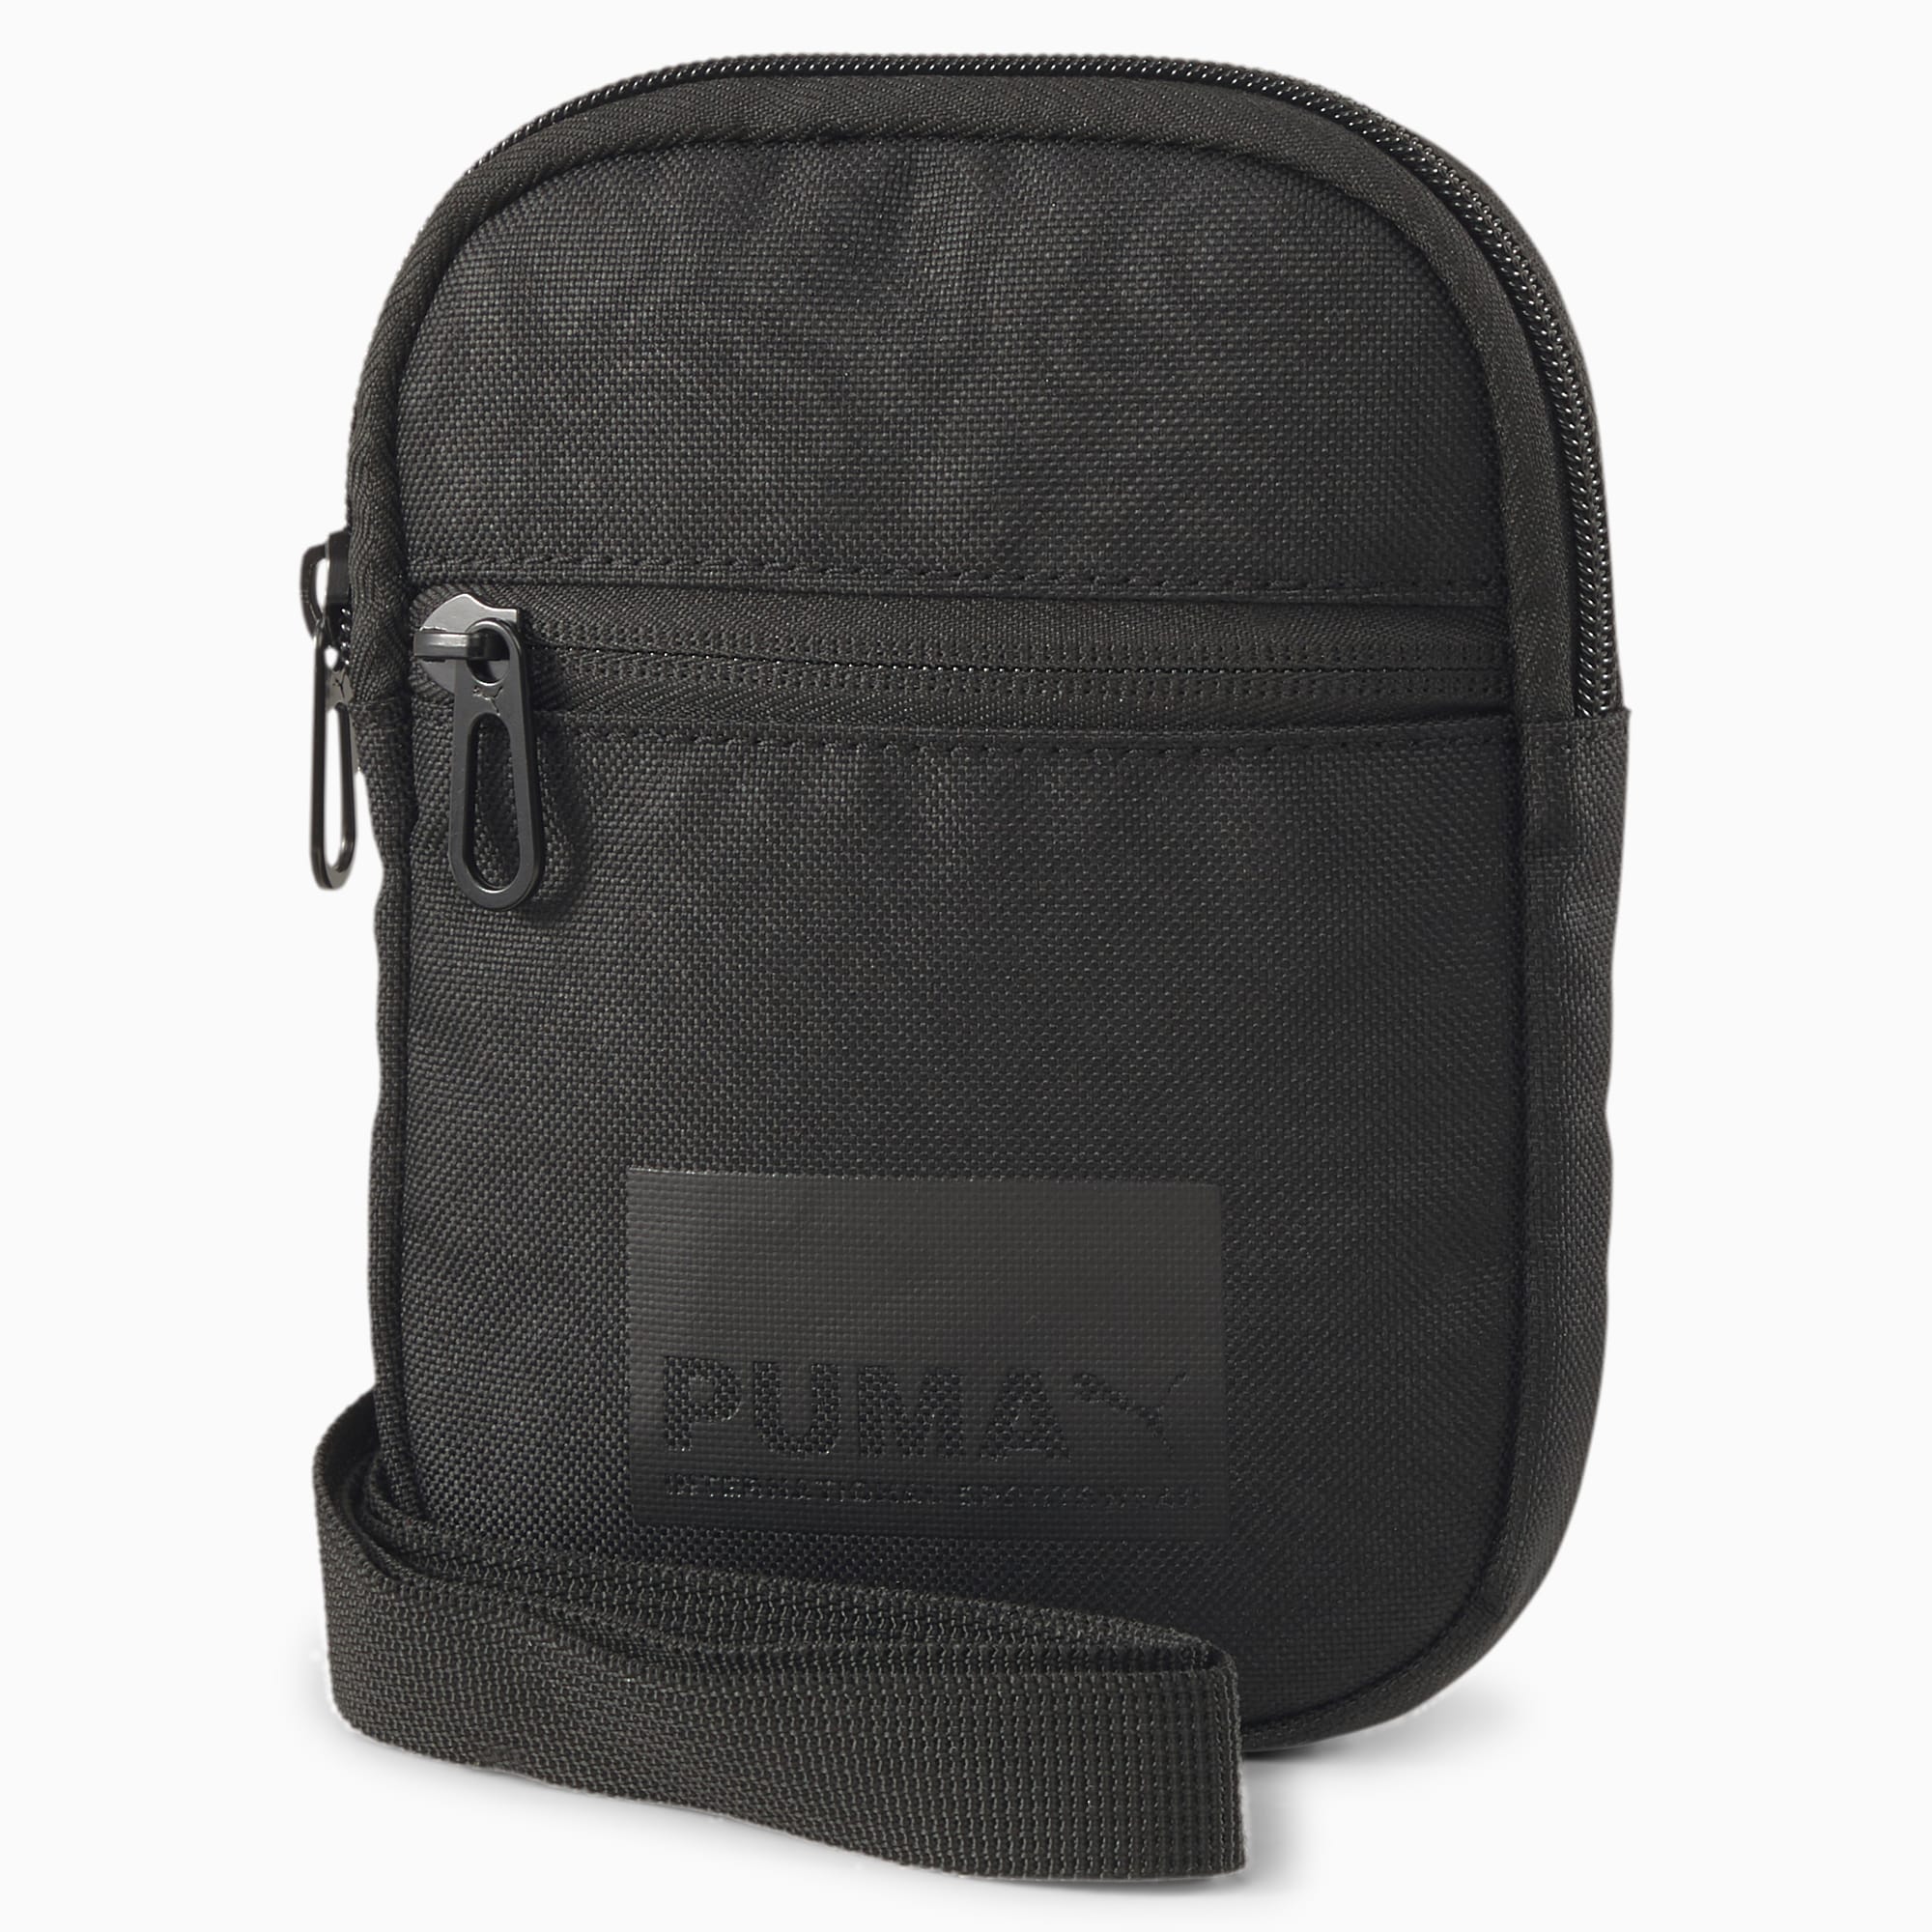 puma street shoulder bag